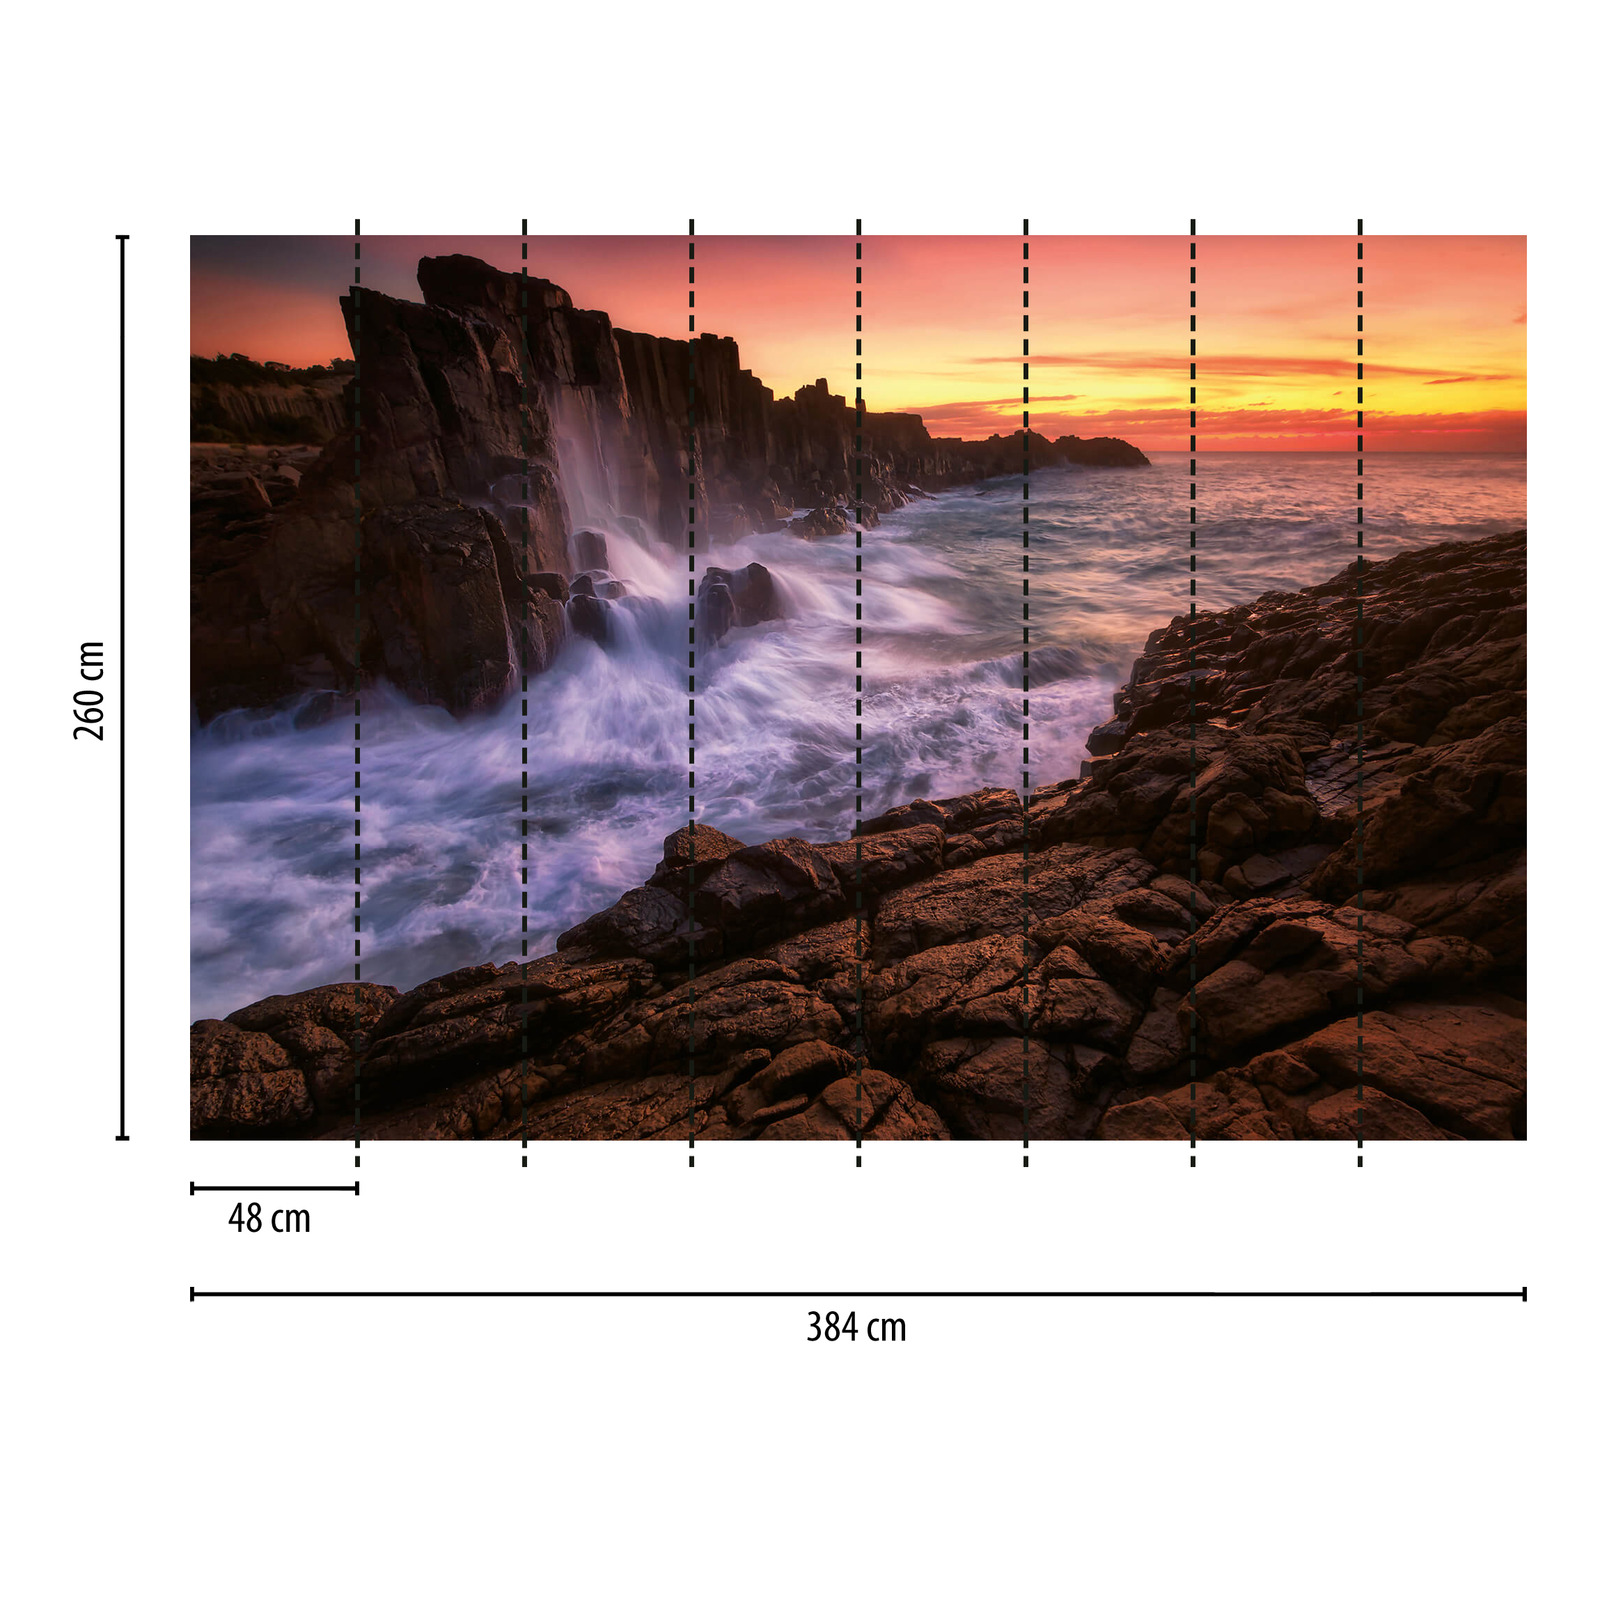             Fotomurali Sunrise Cliffs - Marrone, Blu
        